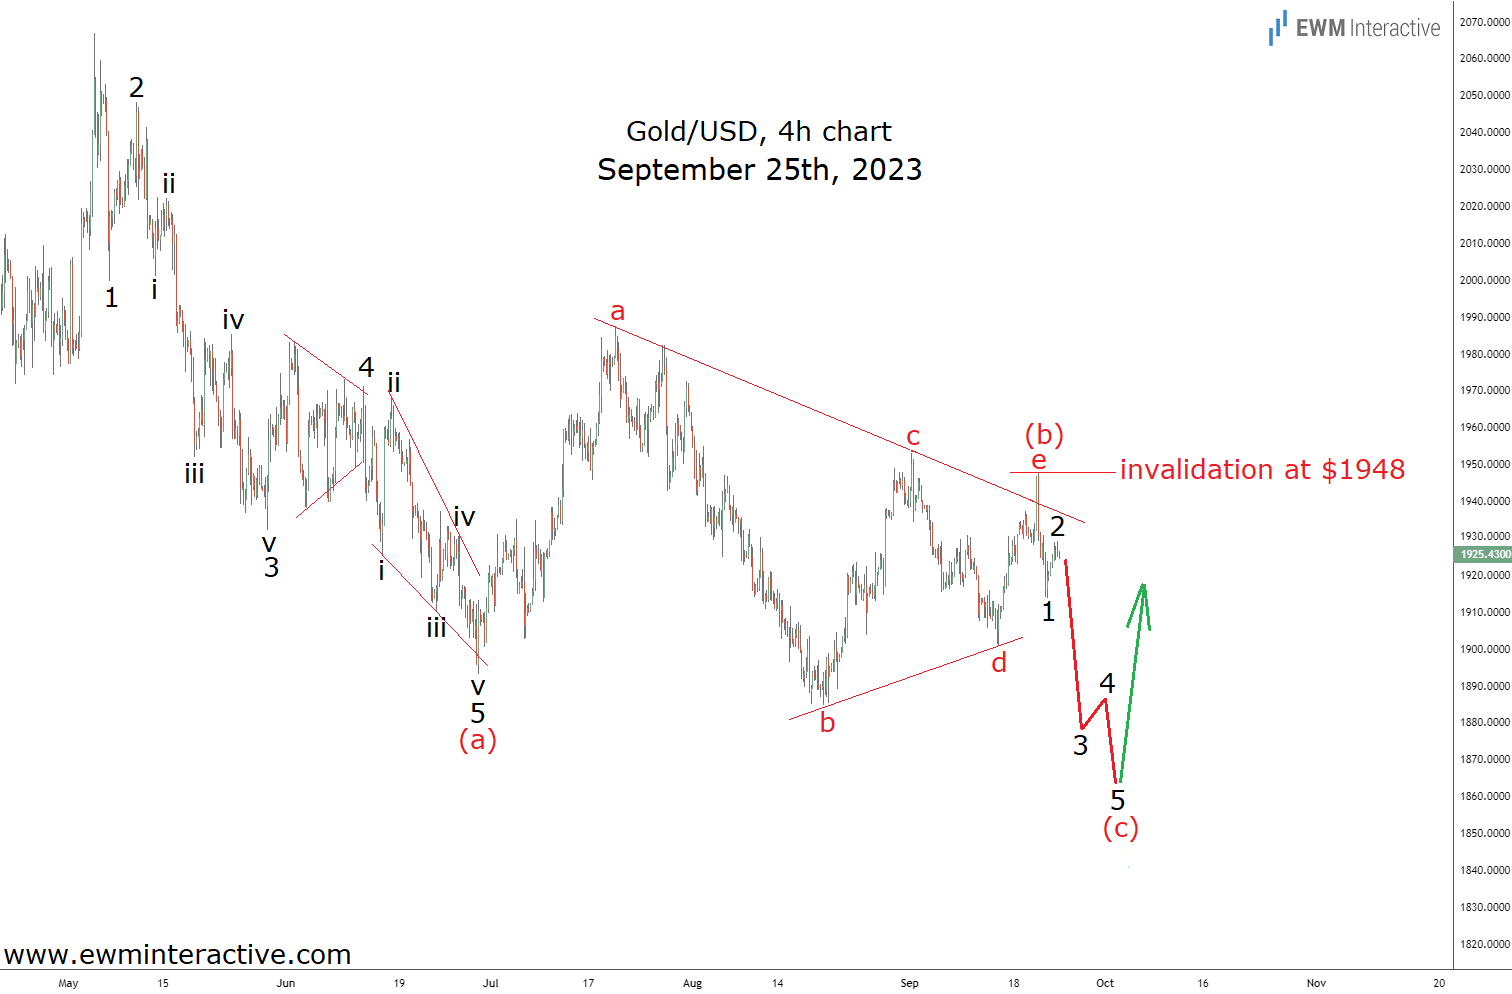 GOLD-4-Hr Chart-25th Sept